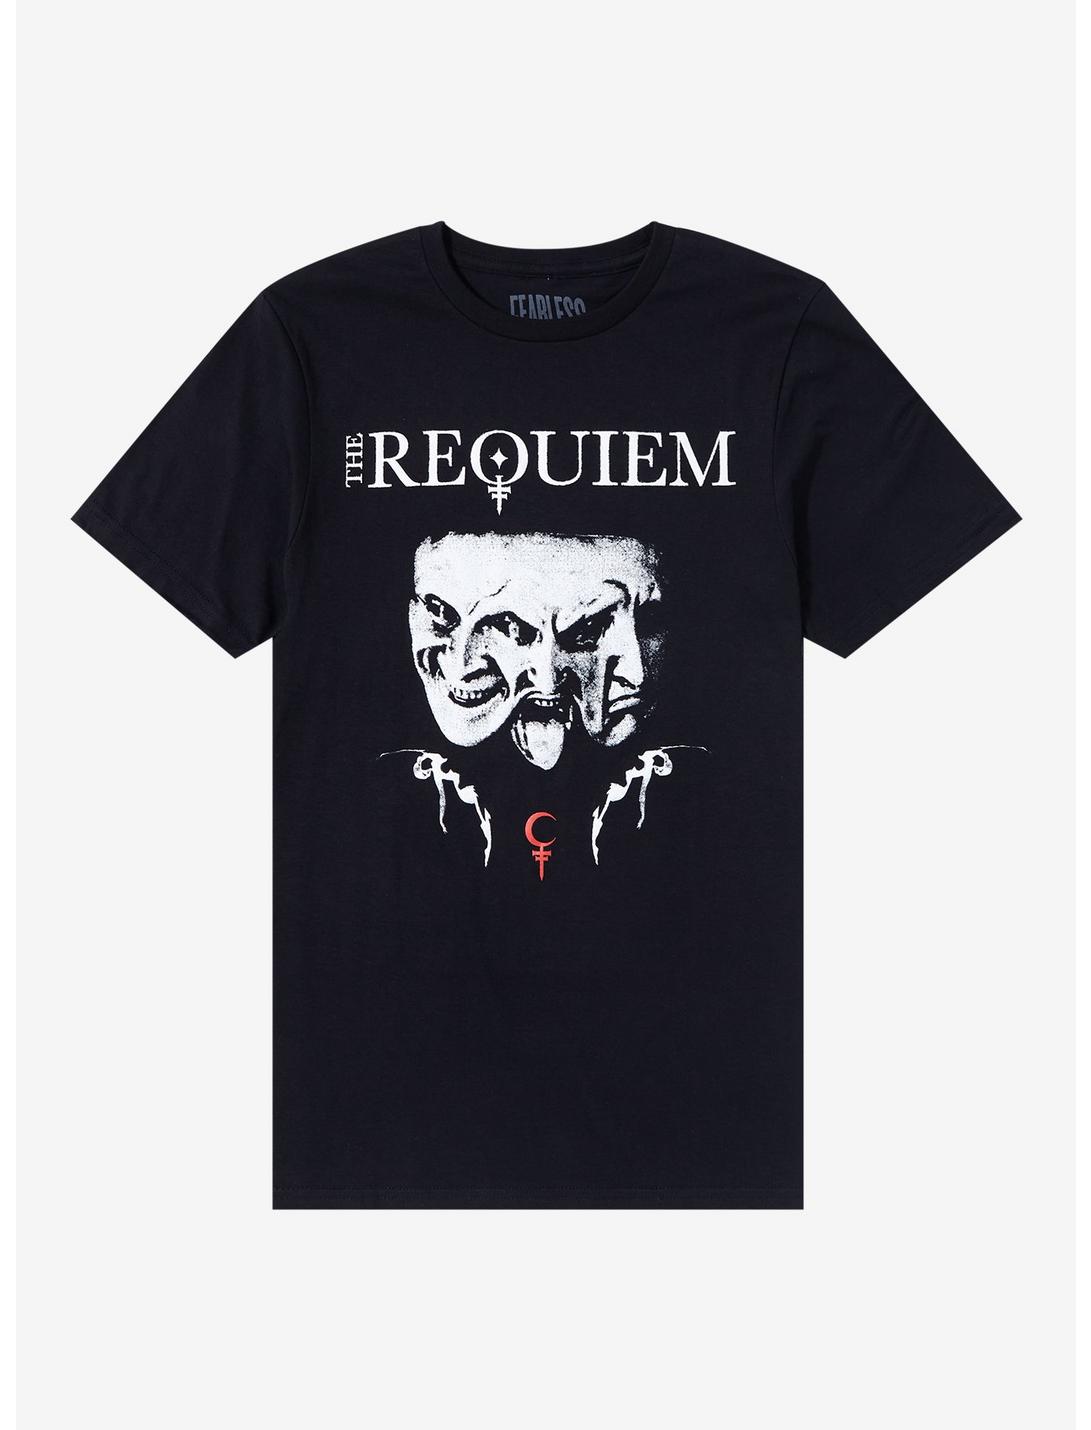 The Requiem Three Faces Boyfriend Fit Girls T-Shirt, BLACK, hi-res